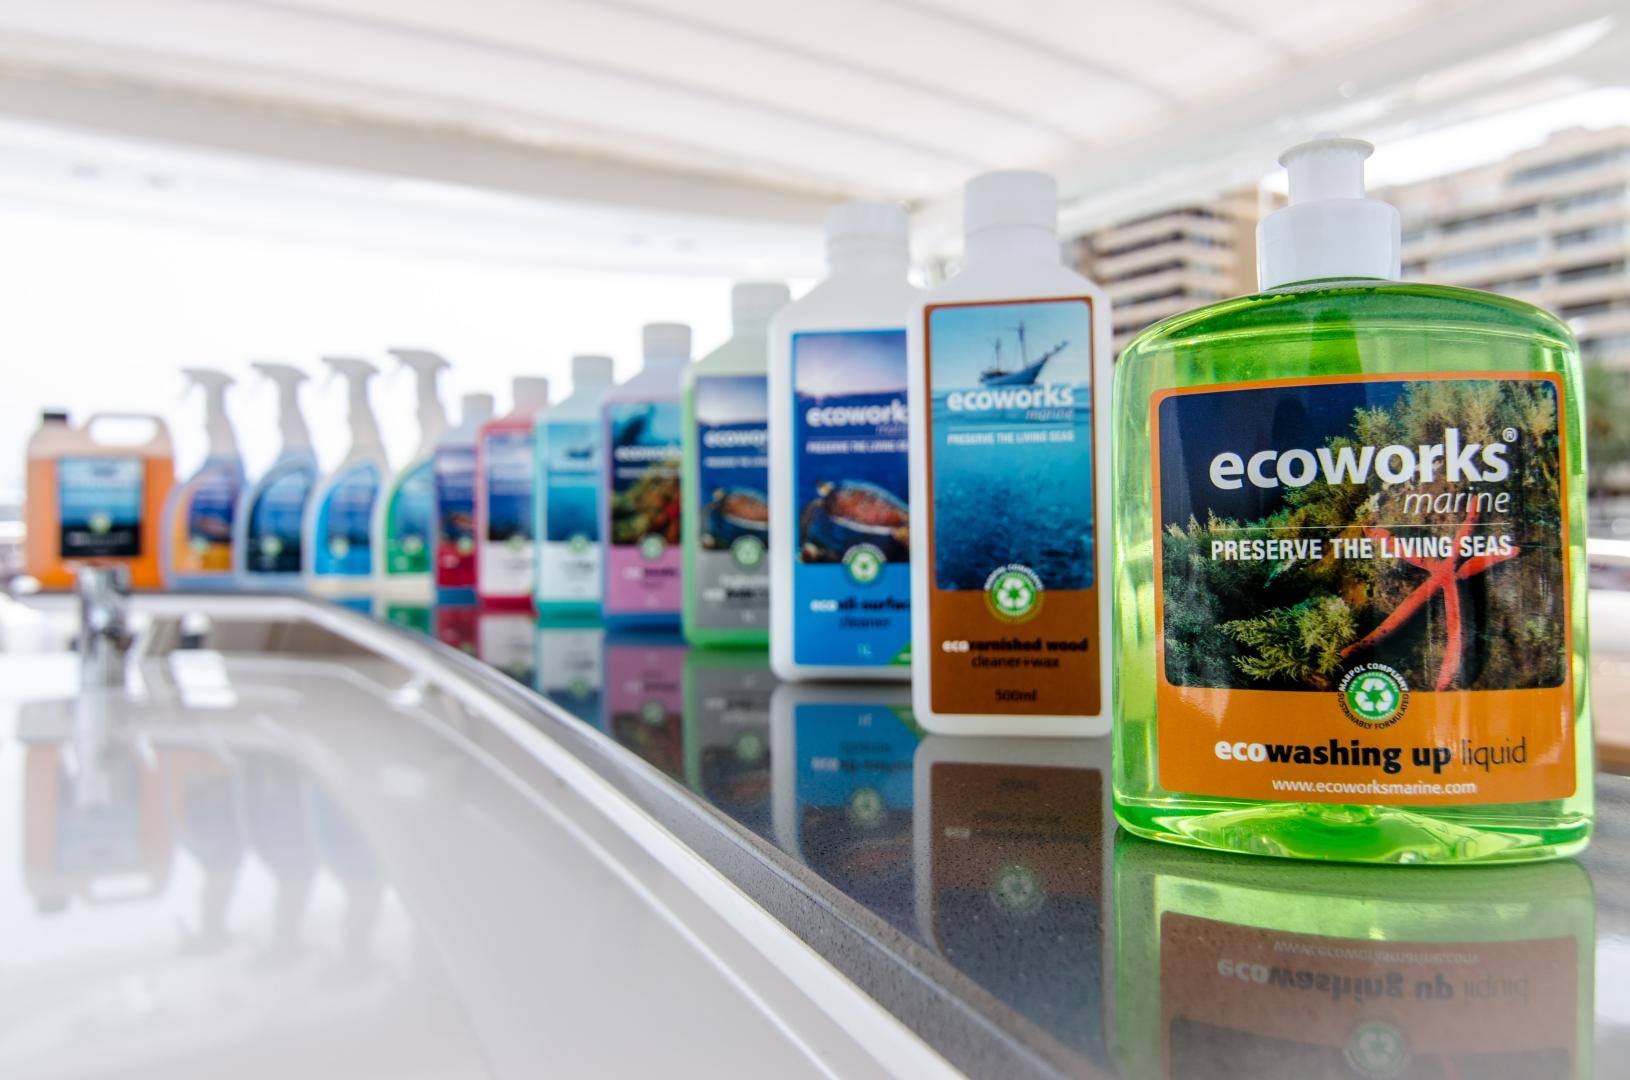 Ecoworks Marine has announced NSM as its Italian distributor